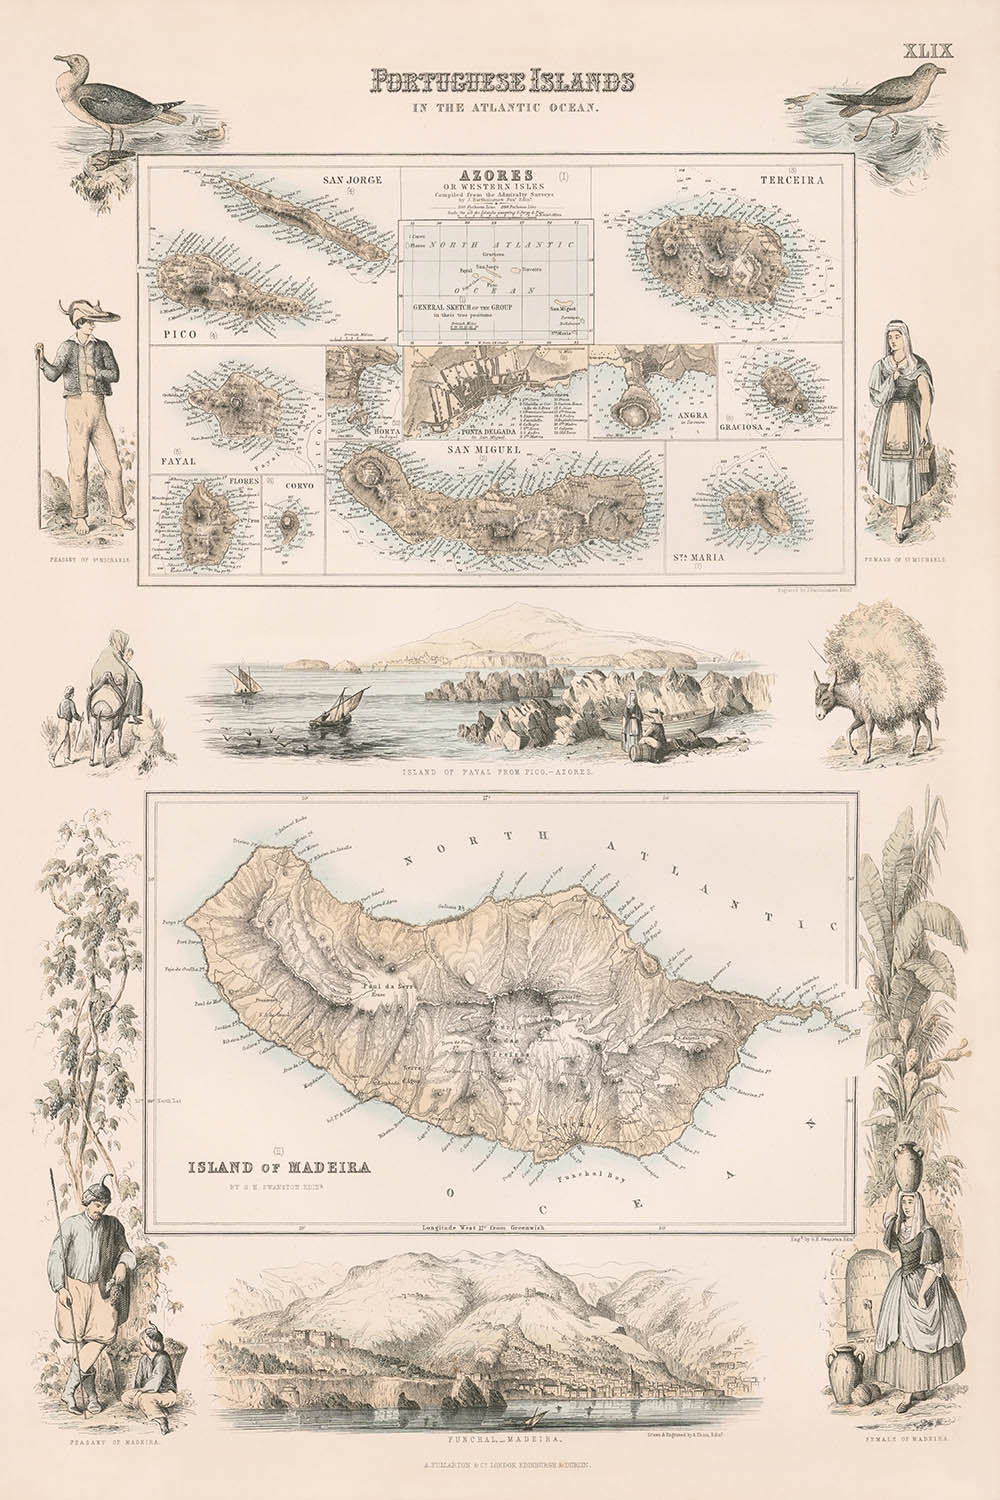 Ancienne carte du Portugal, 1865 : Funchal, Angra, Ponta Delgada, Fayal, Pico